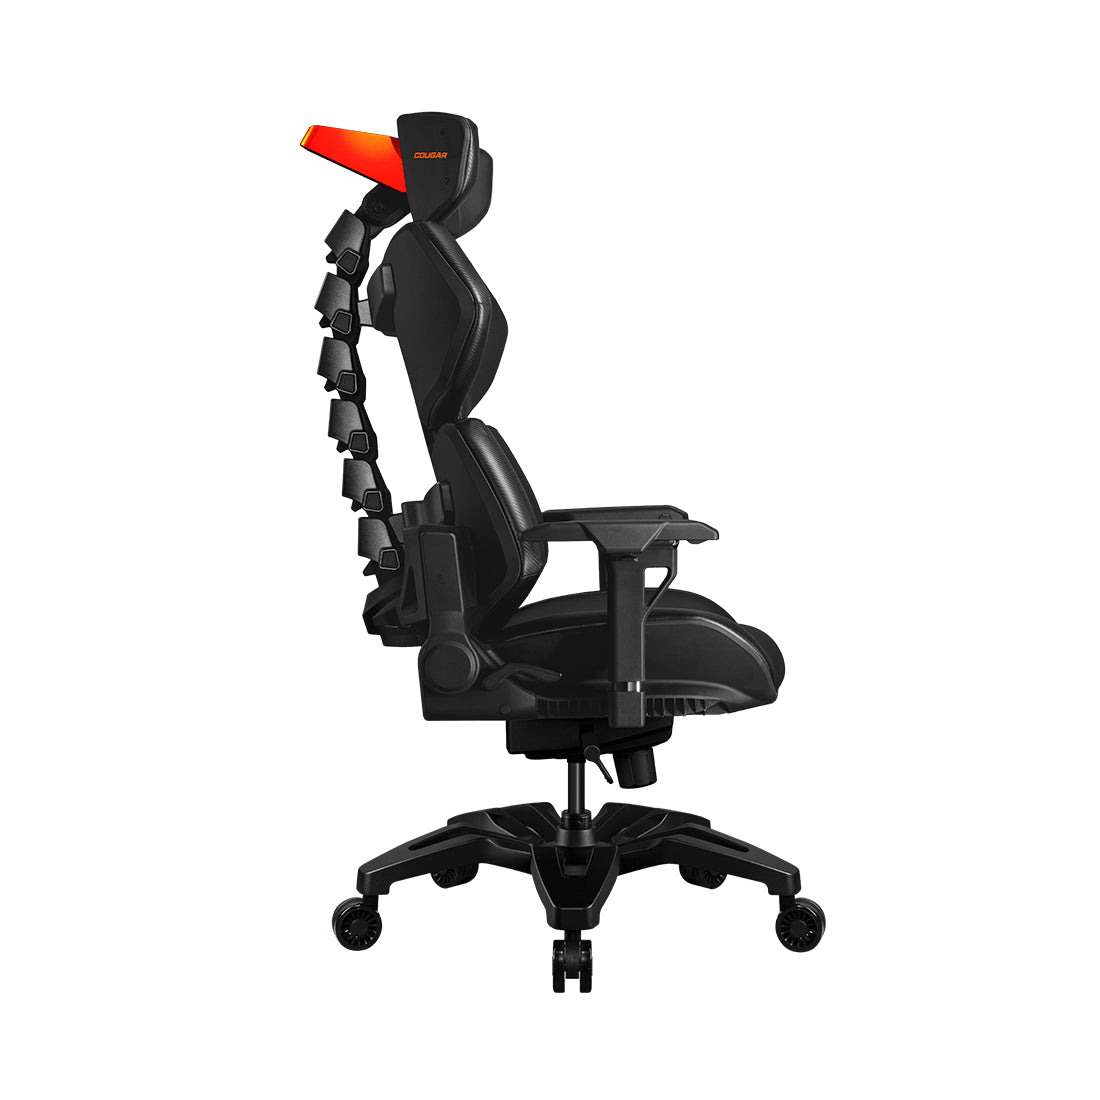 Cougar Terminator Ergonomic Gaming Chair - Black - Store 974 | ستور ٩٧٤